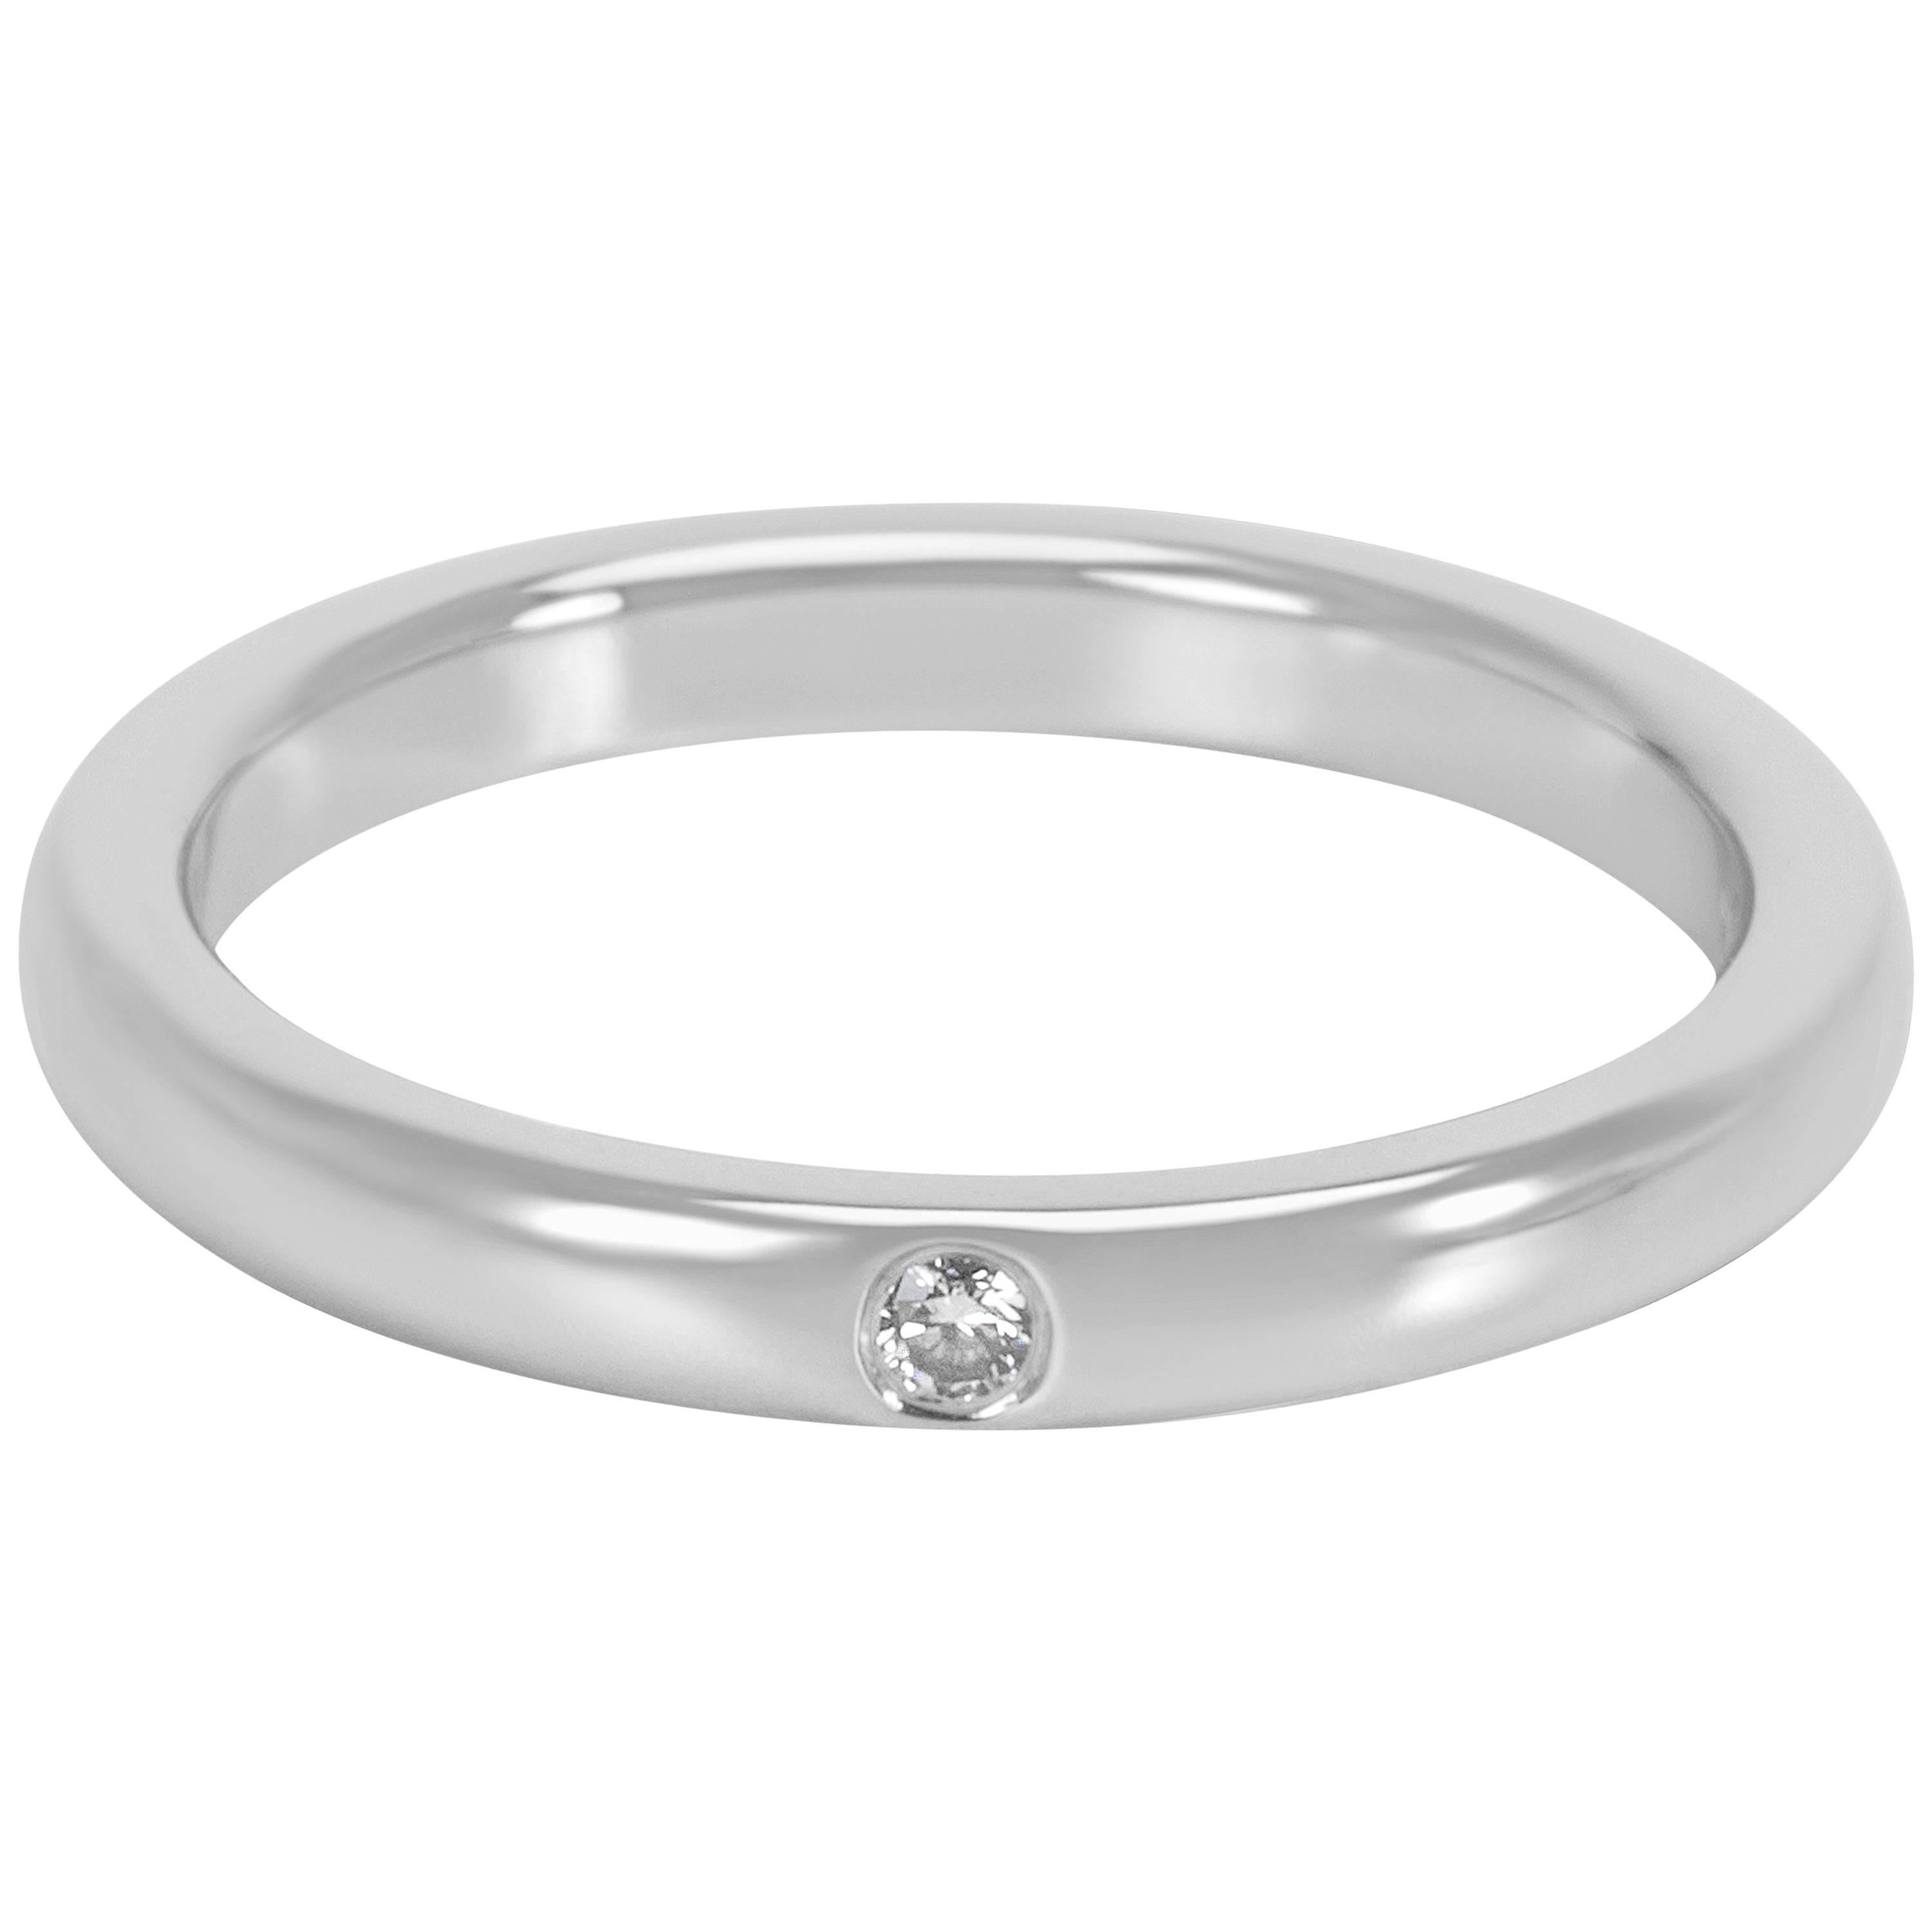 Tiffany & Co Elsa Peretti Diamond Ring in Platinum 0.02 Carat